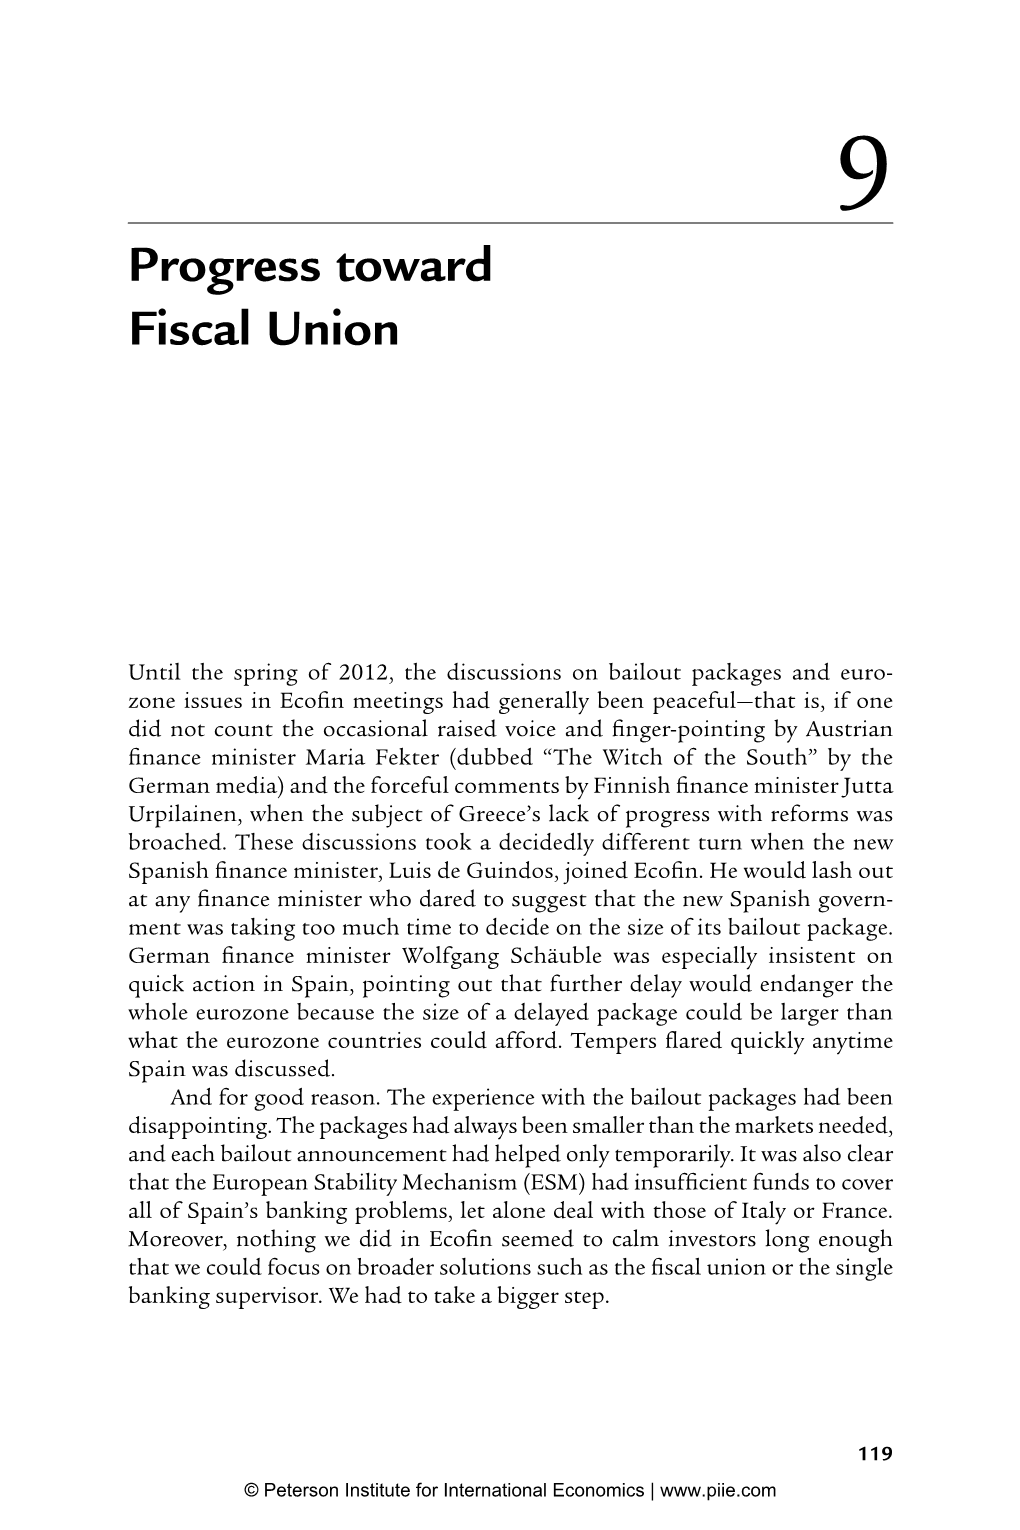 Progress Toward Fiscal Union